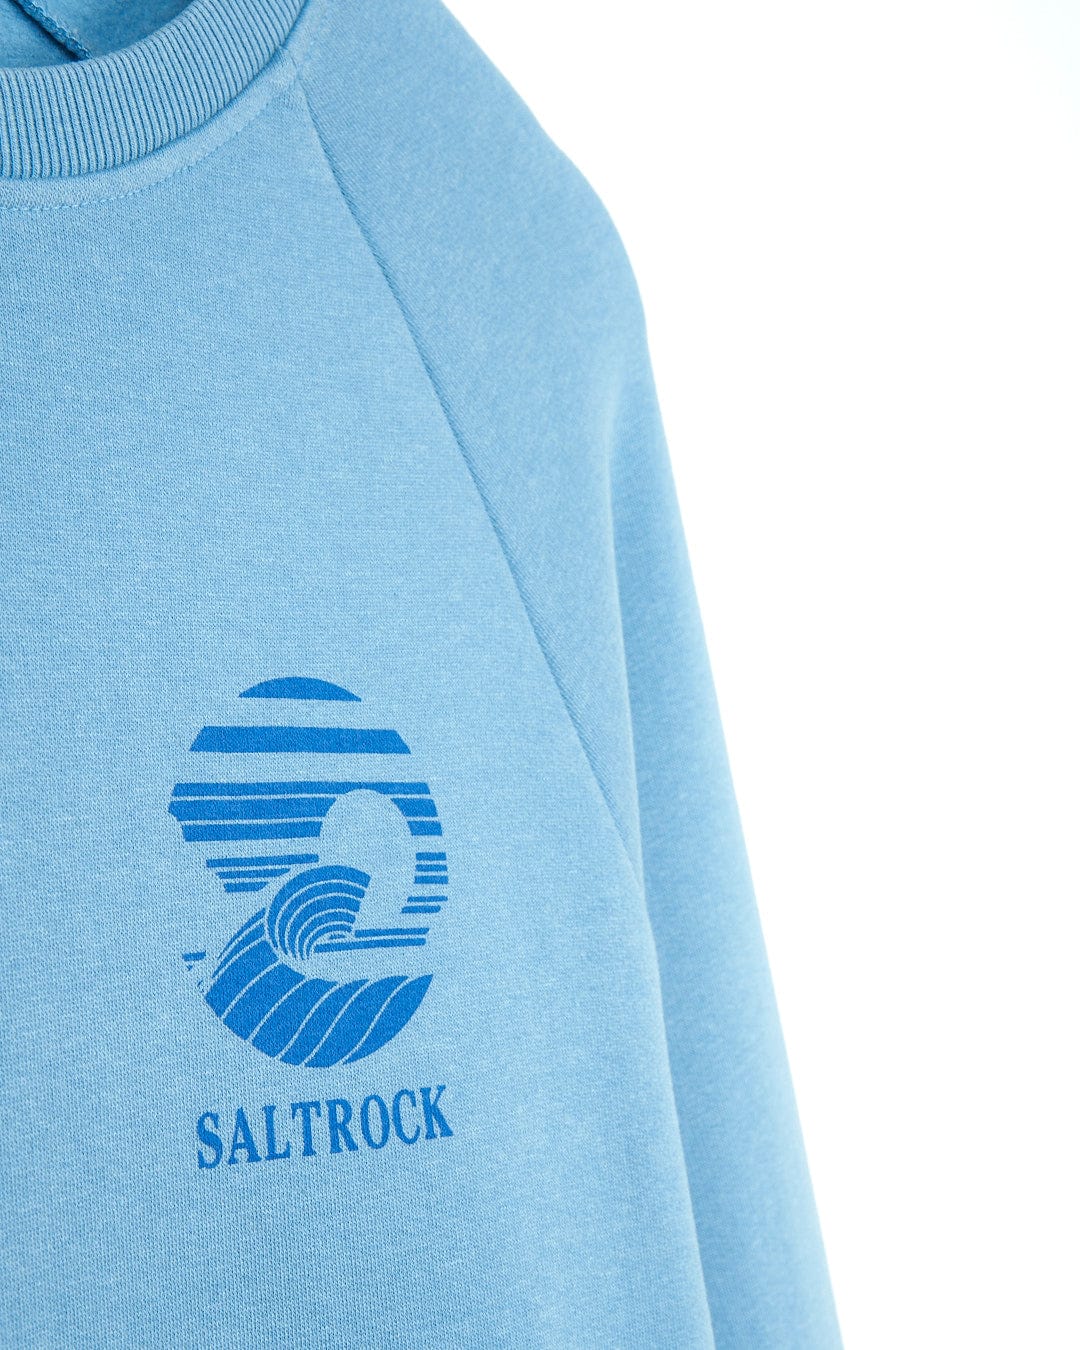 A Atlantic - Mens Crew Sweat - Light Blue sweatshirt with the Saltrock logo on it.